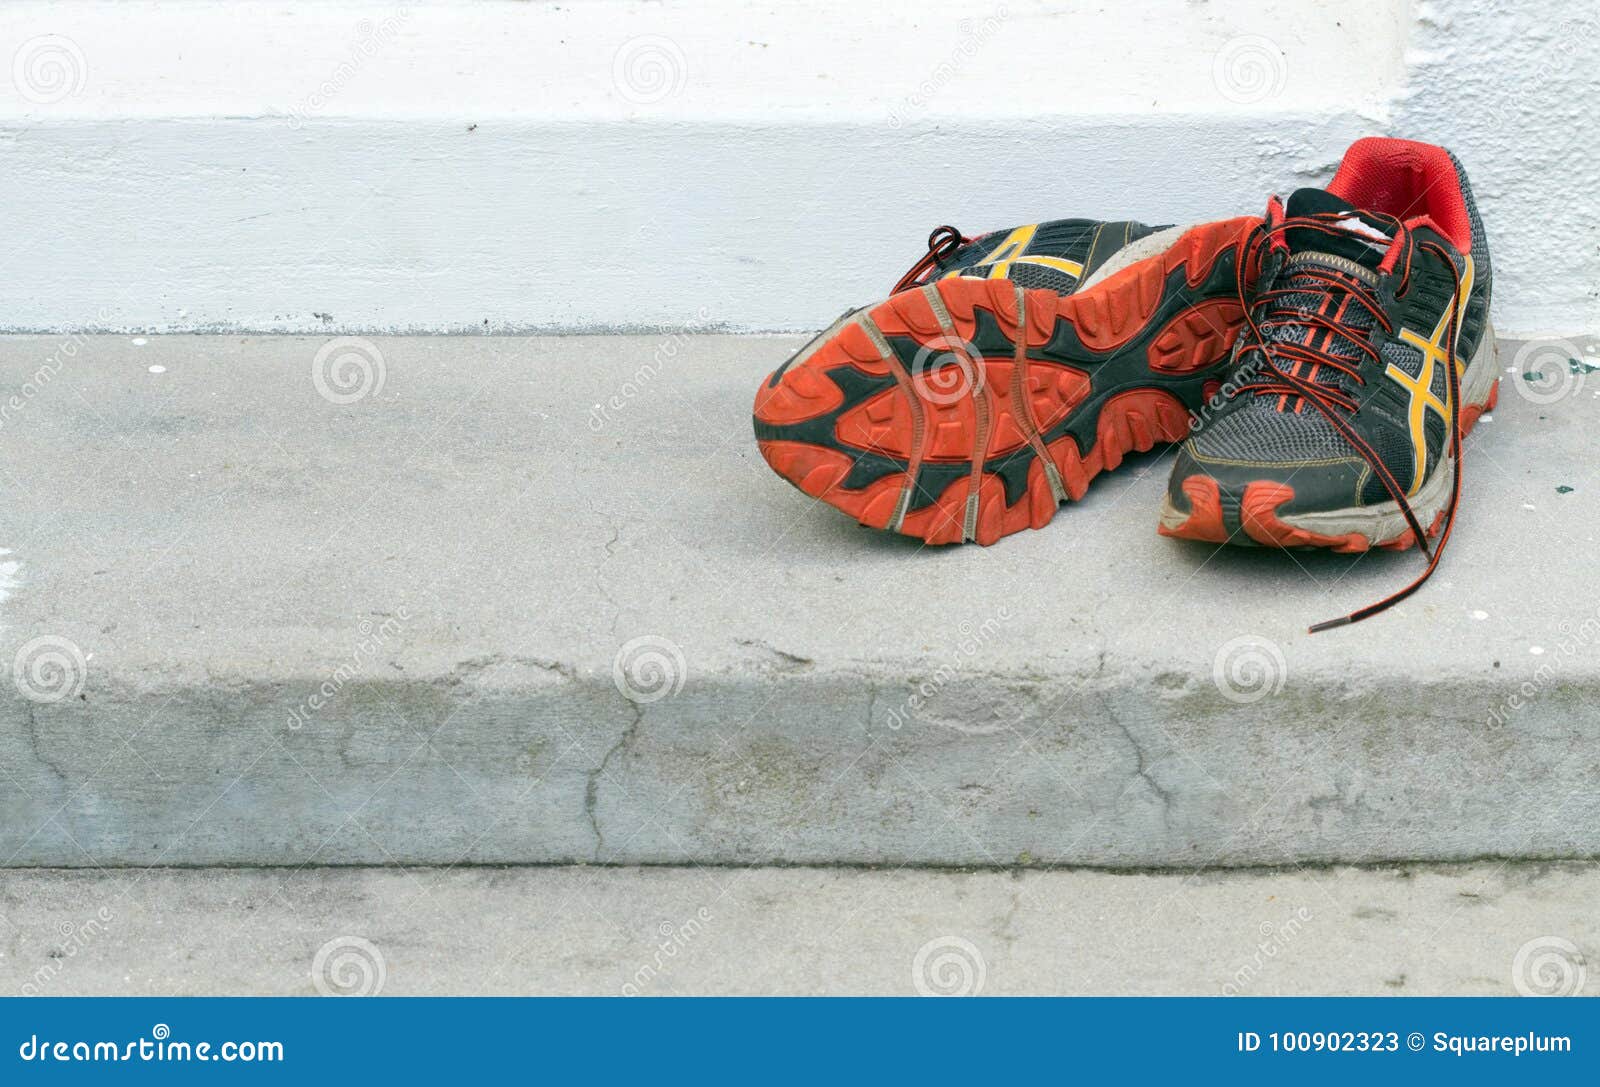 sidewalk sports heelys